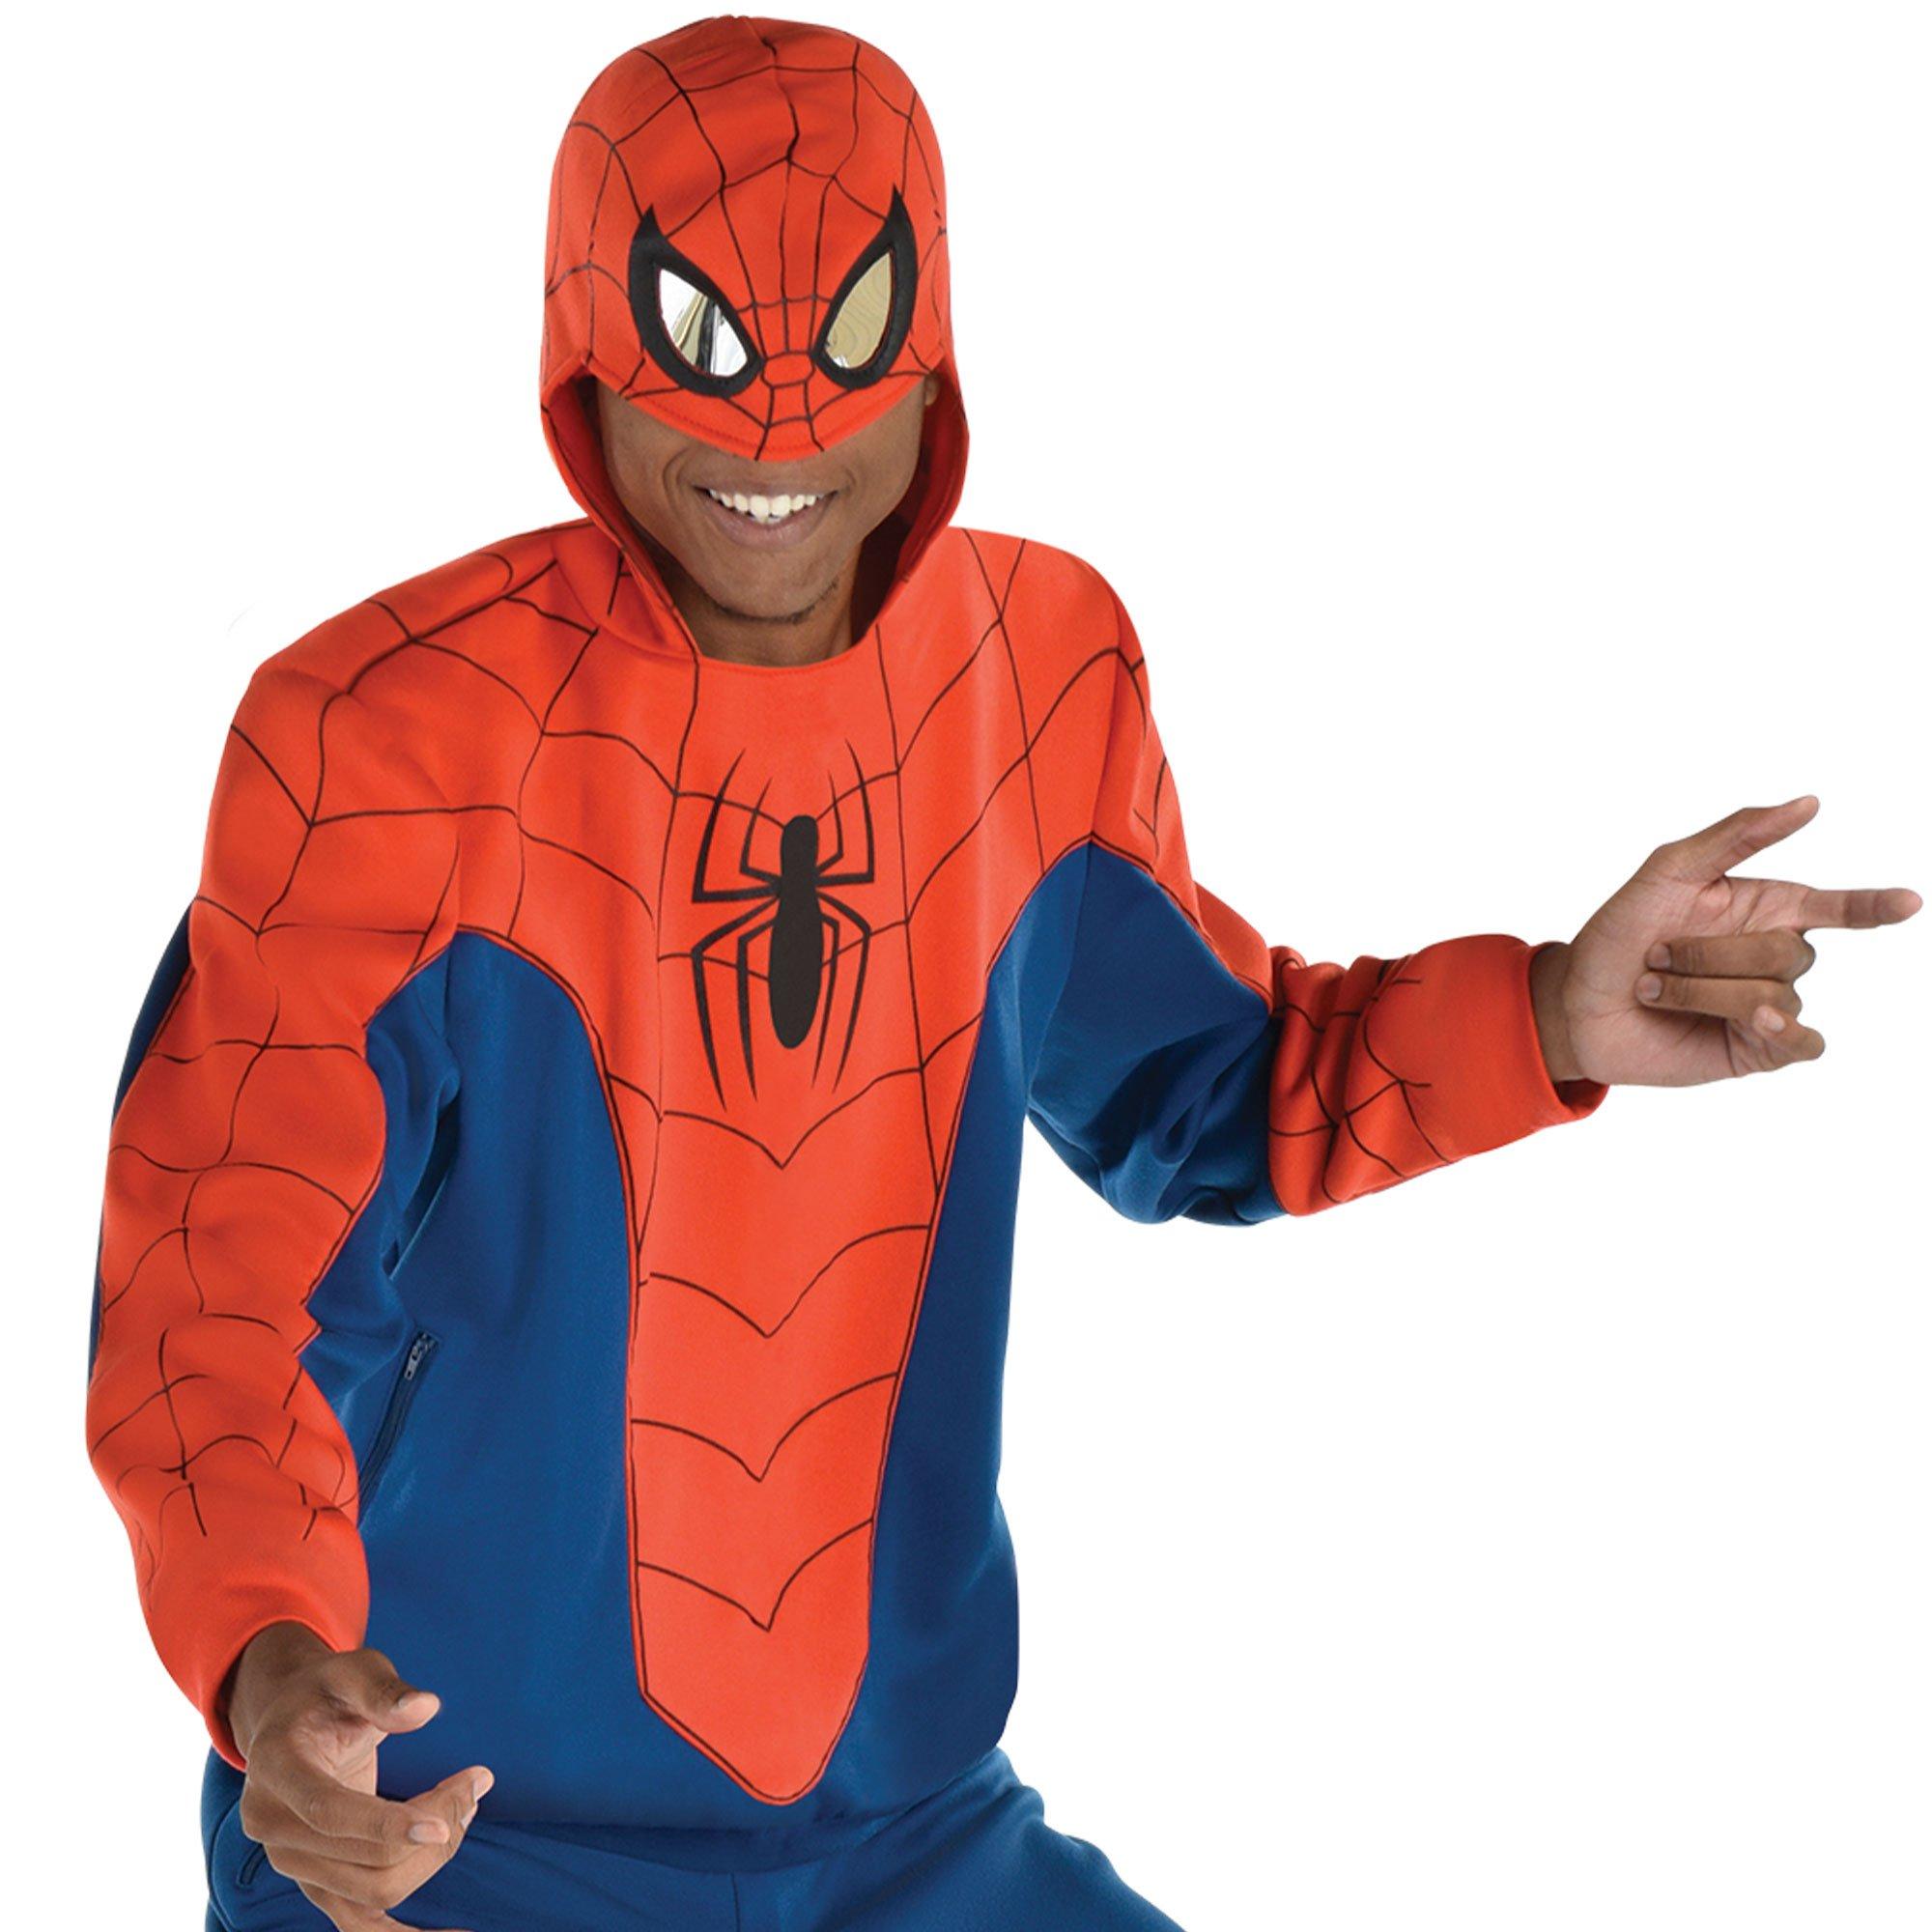 Marvel Boys' Spiderman Costume Hoodie (Toddler Boys & Little Boys